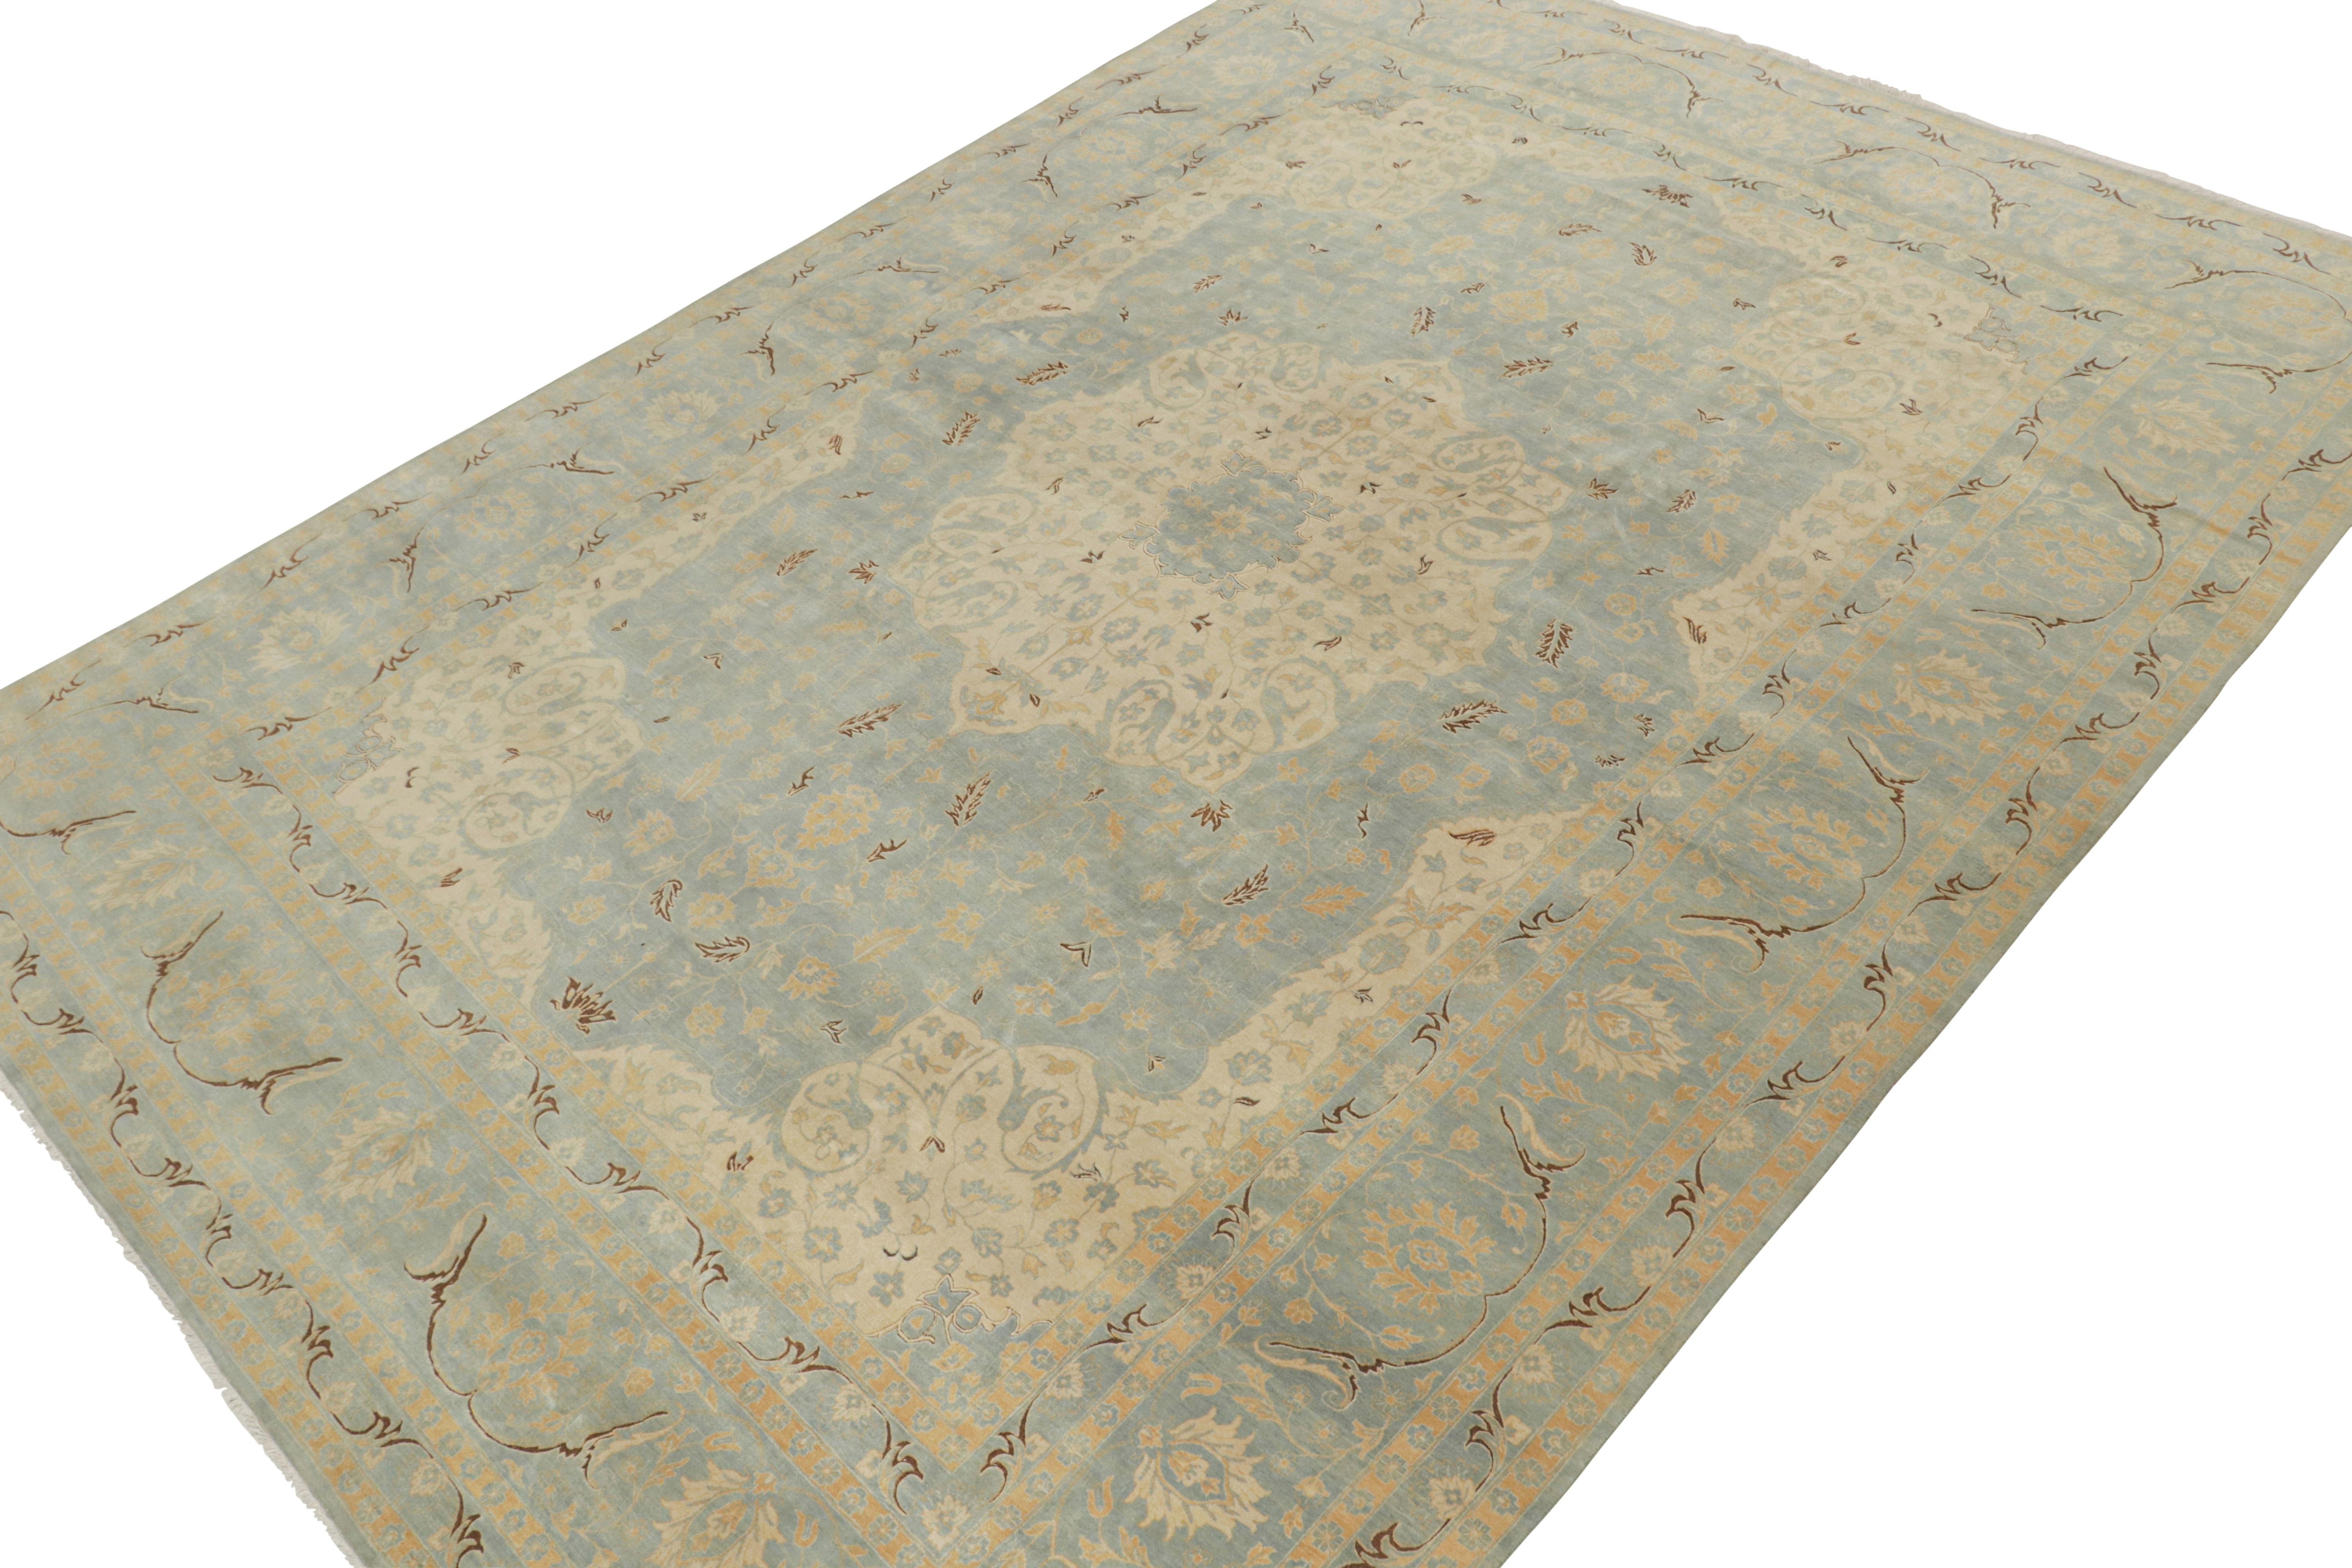 Indian Rug & Kilim's Classic Tabriz style rug in Blue & Beige Floral Patterns For Sale